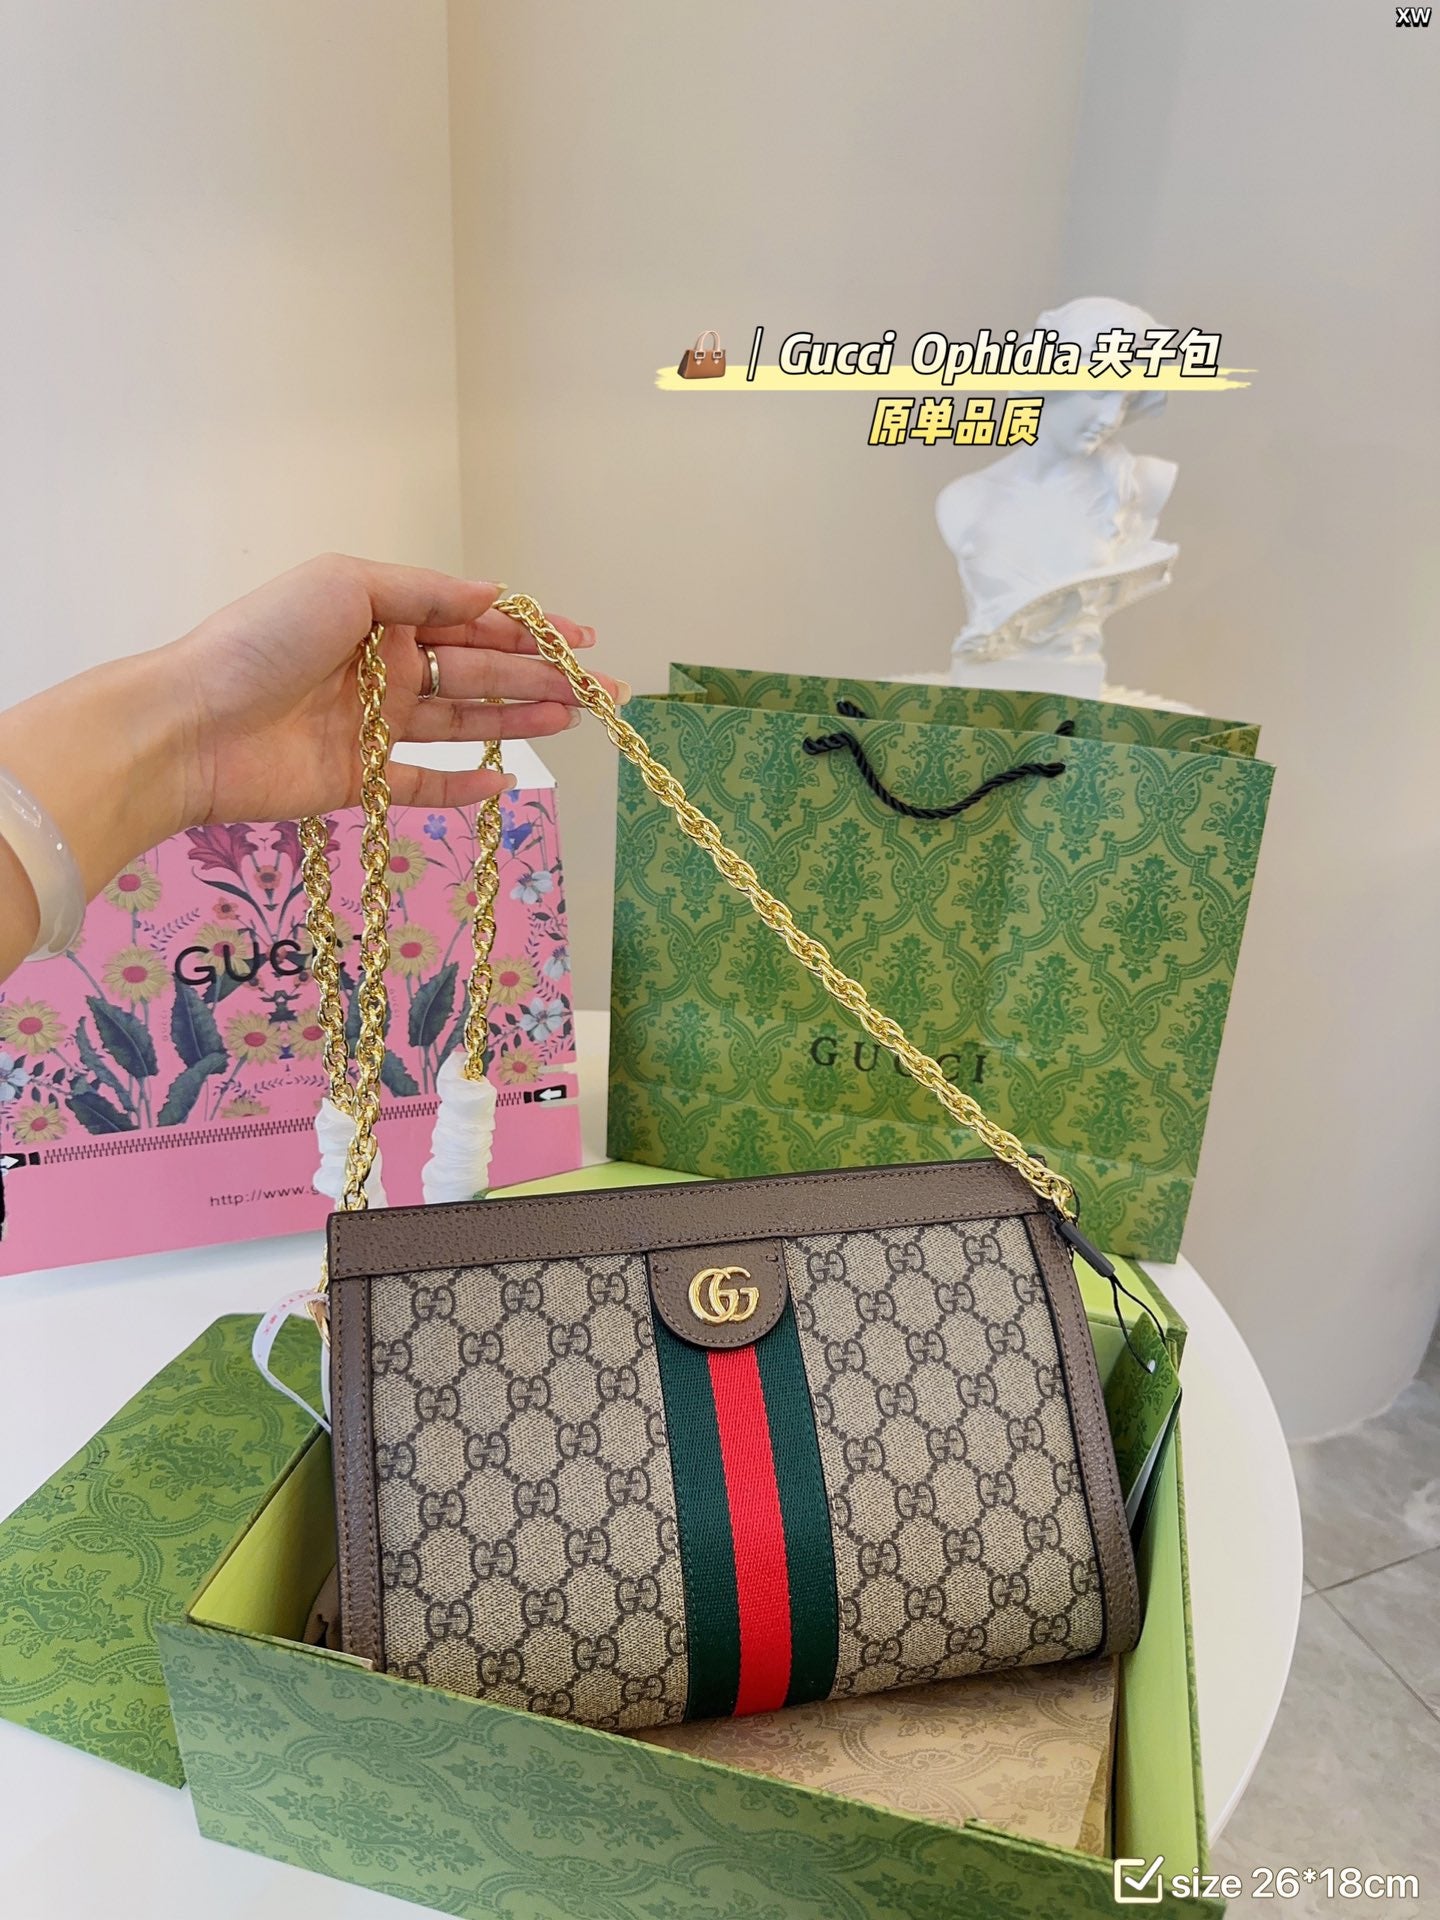 Gucci Ophidia Handbag